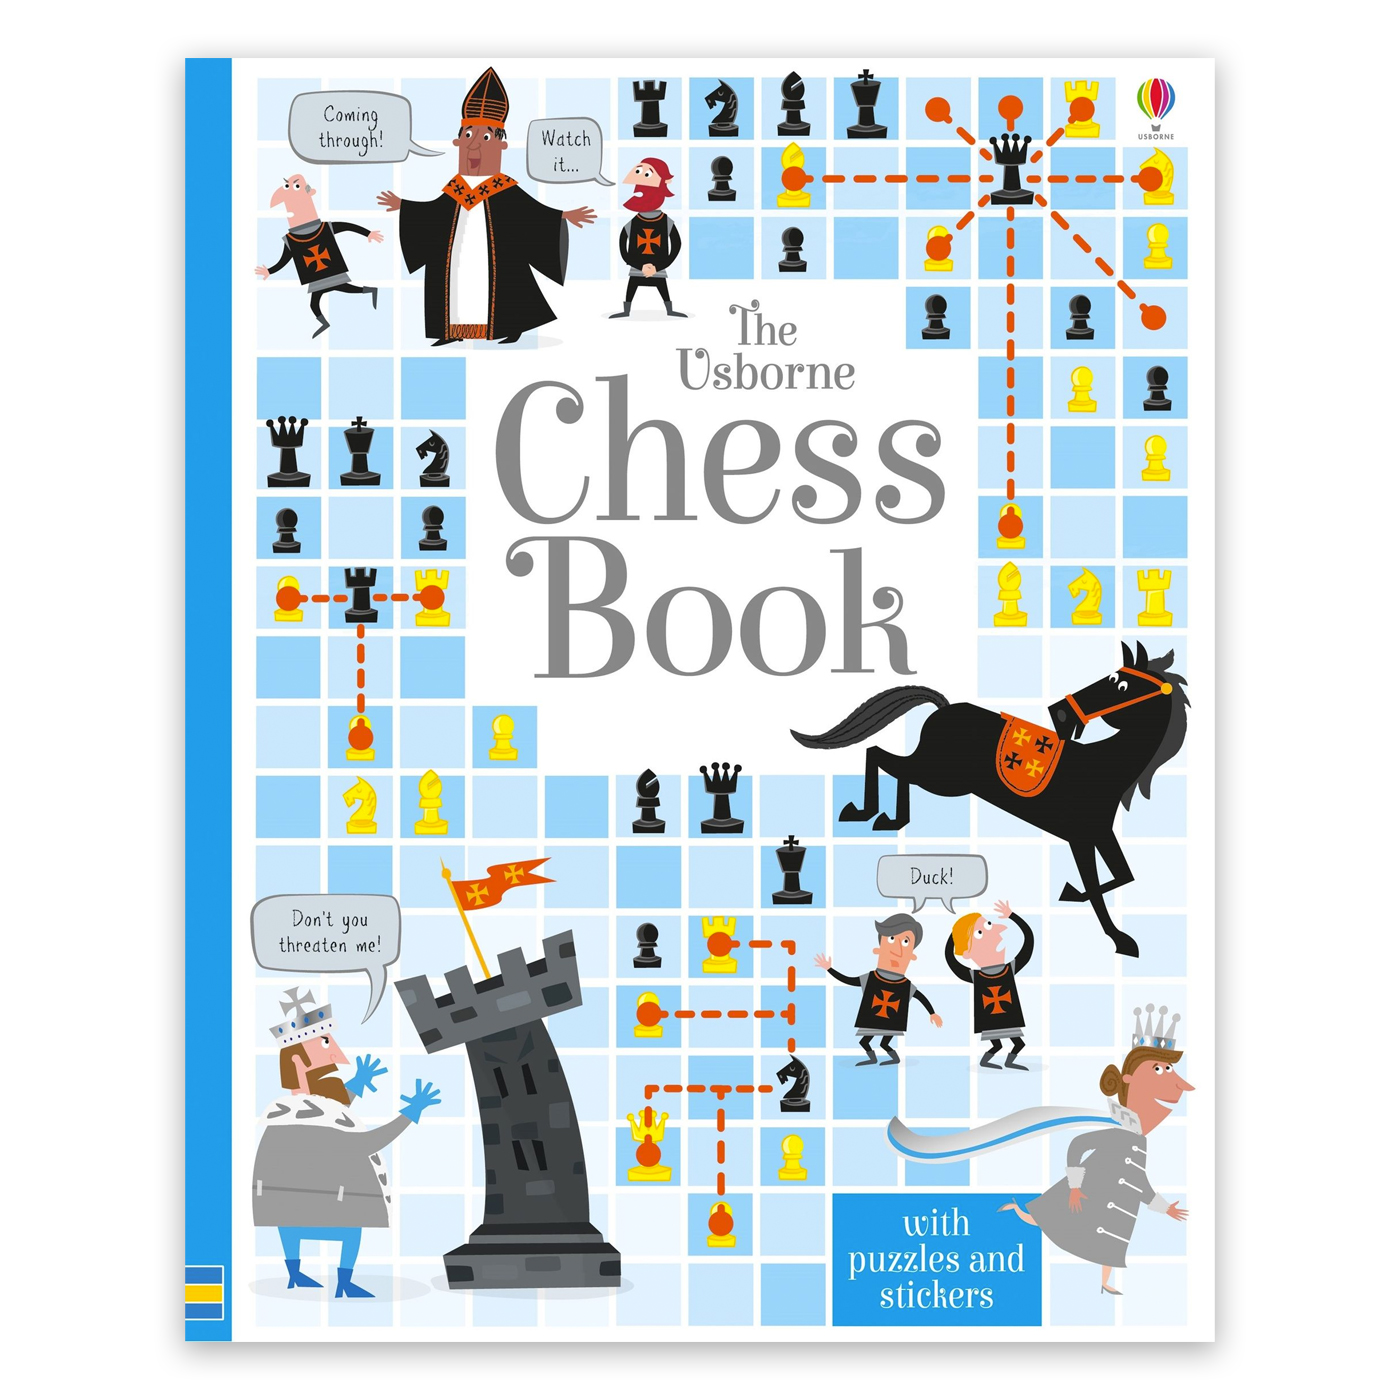  The Usborne Chess Book